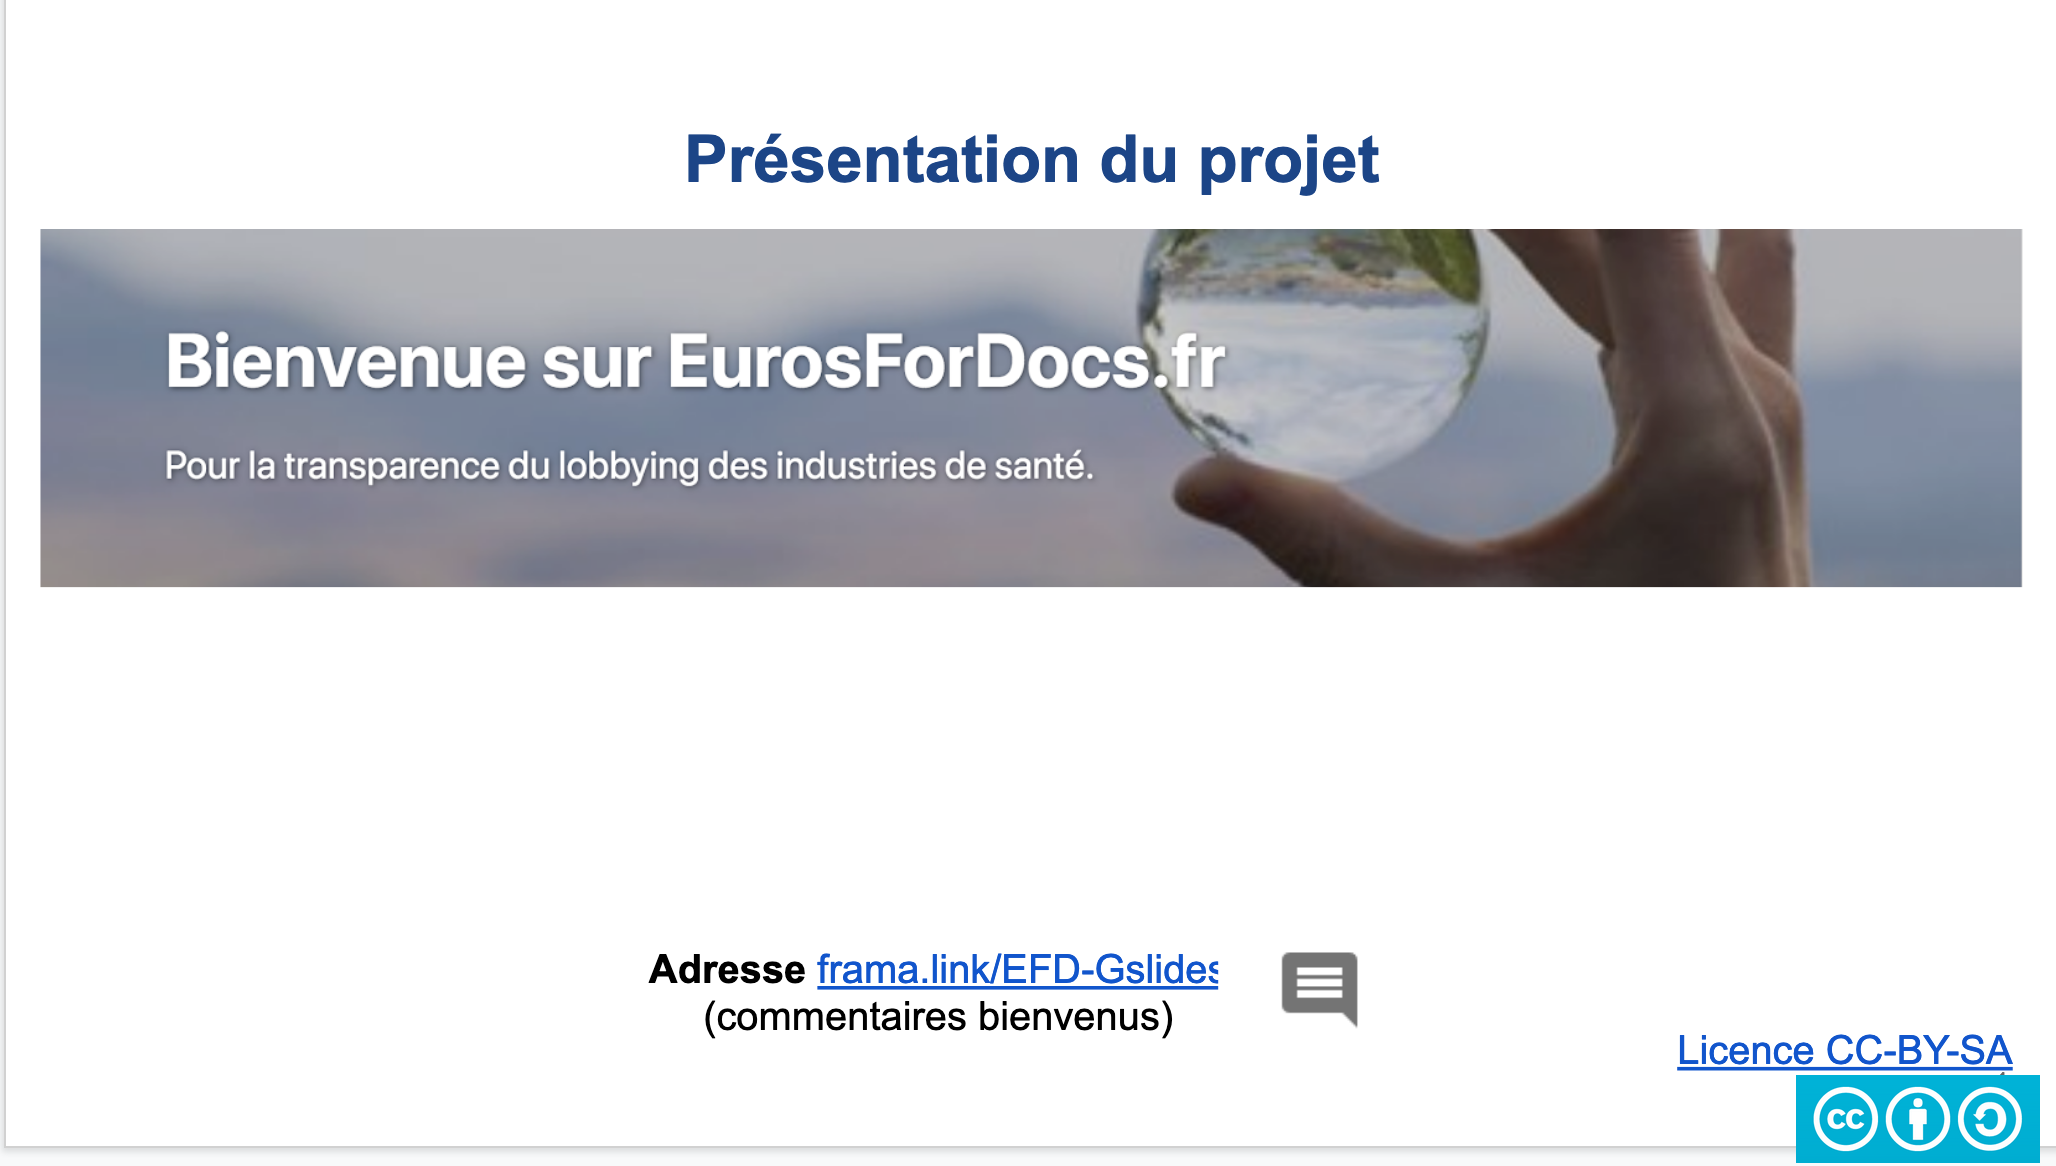 Présentation du projet EurosForDocs